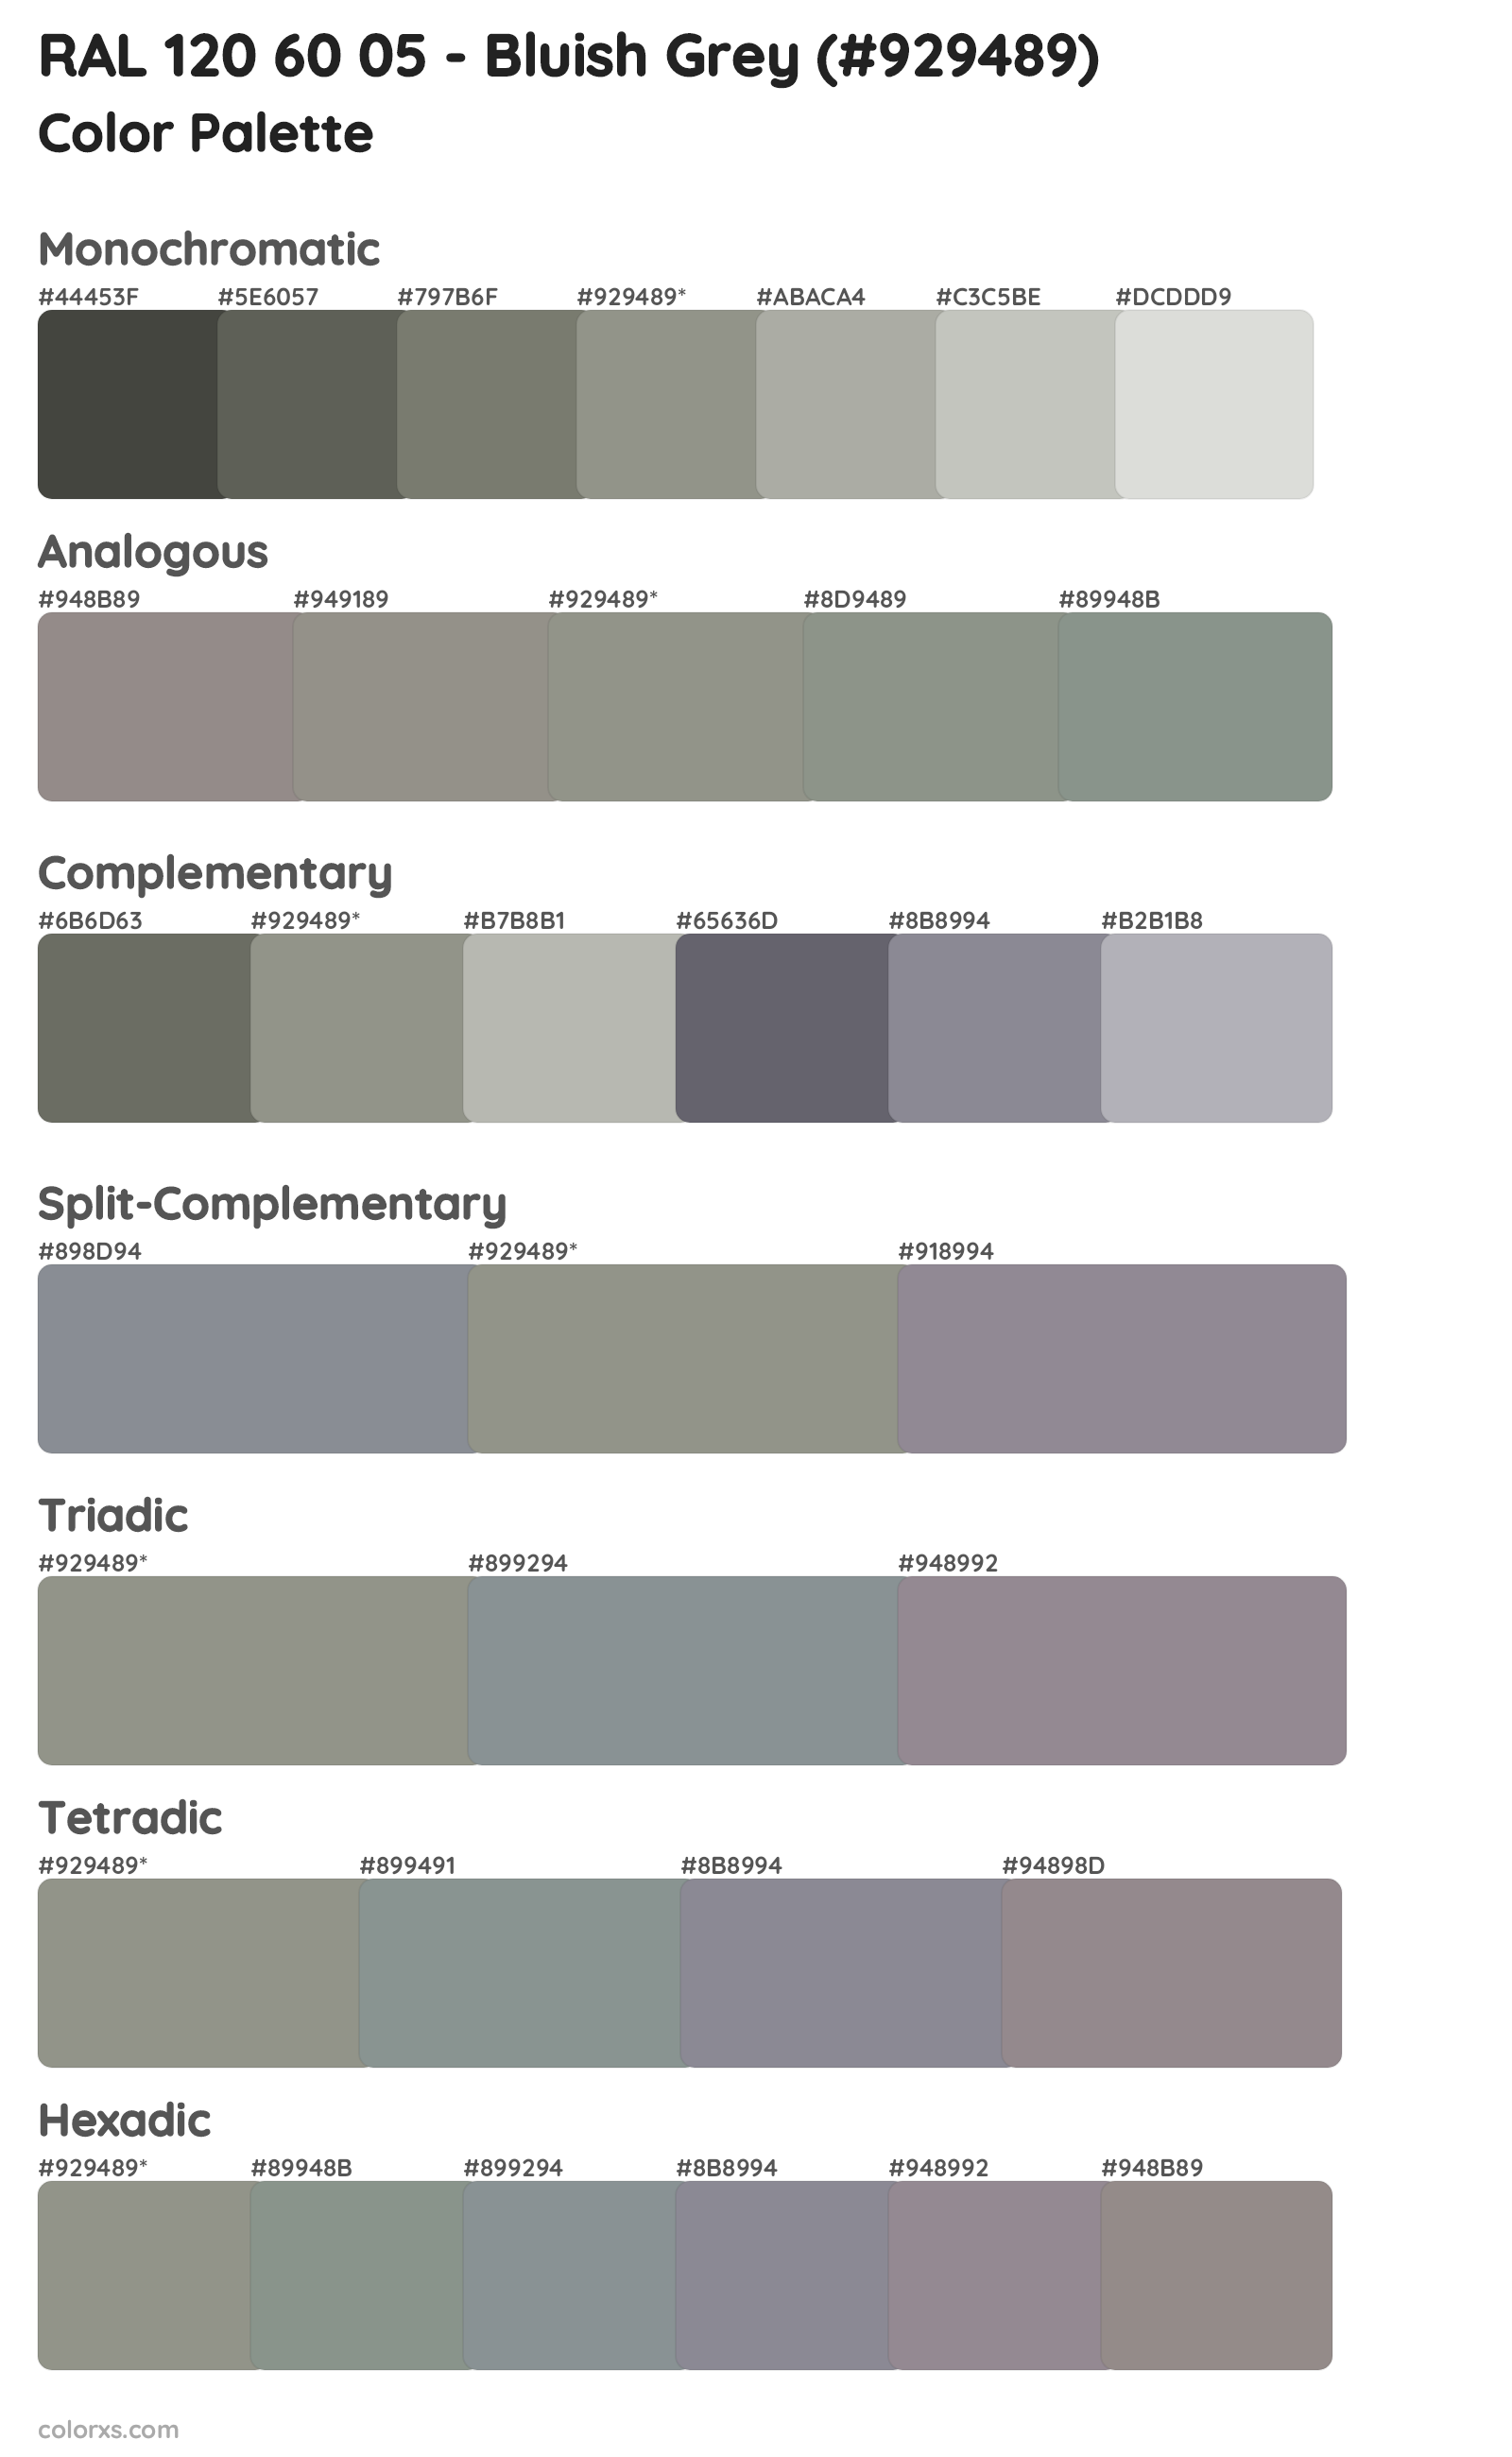 RAL 120 60 05 - Bluish Grey Color Scheme Palettes